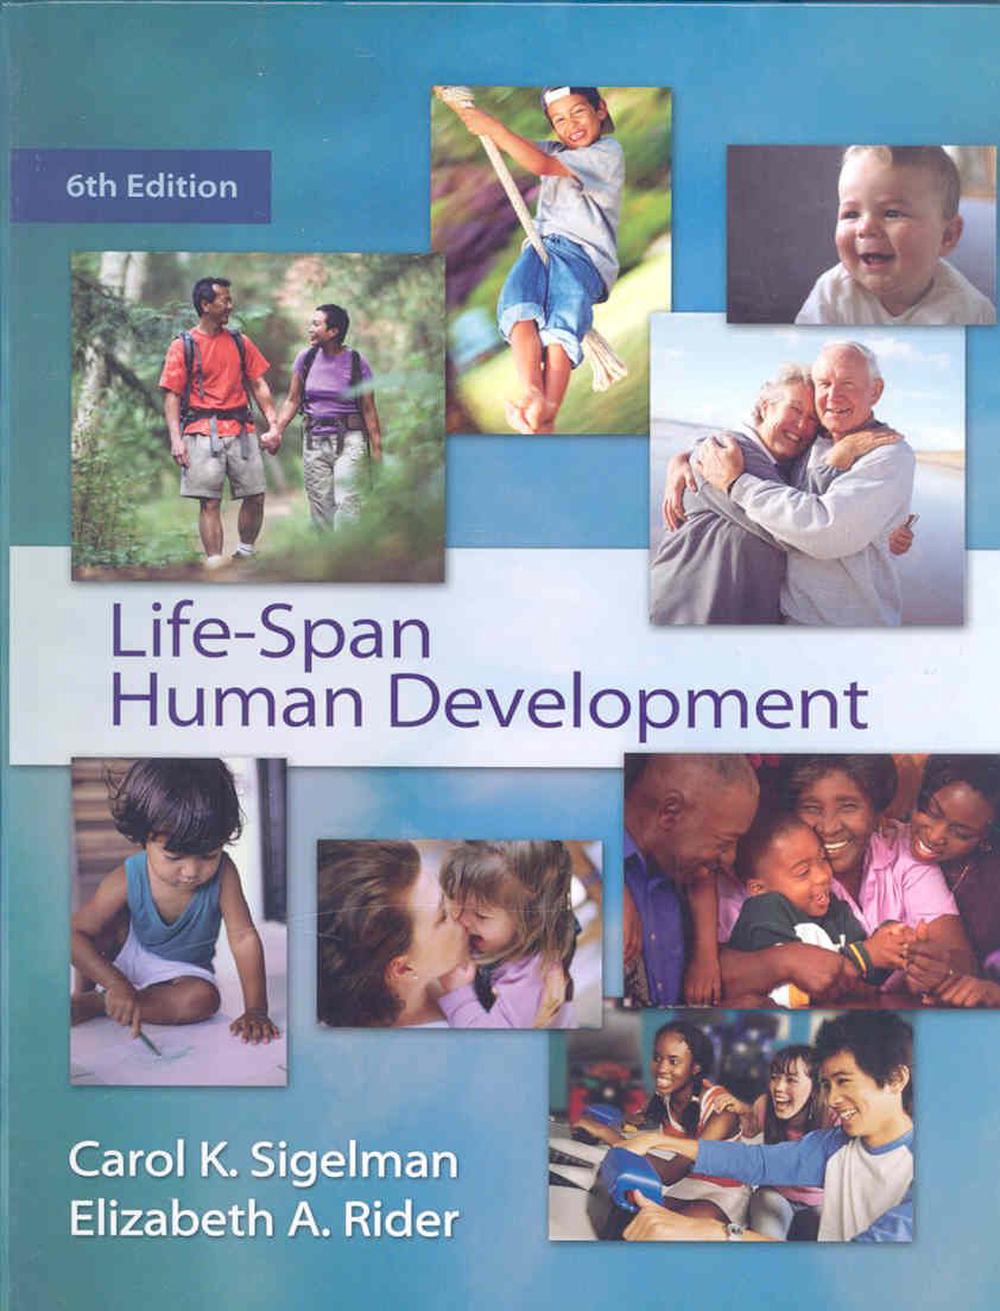 LifeSpan Human Development by Carol K. Sigelman, Hardcover, 9780495553403 Buy online at The Nile